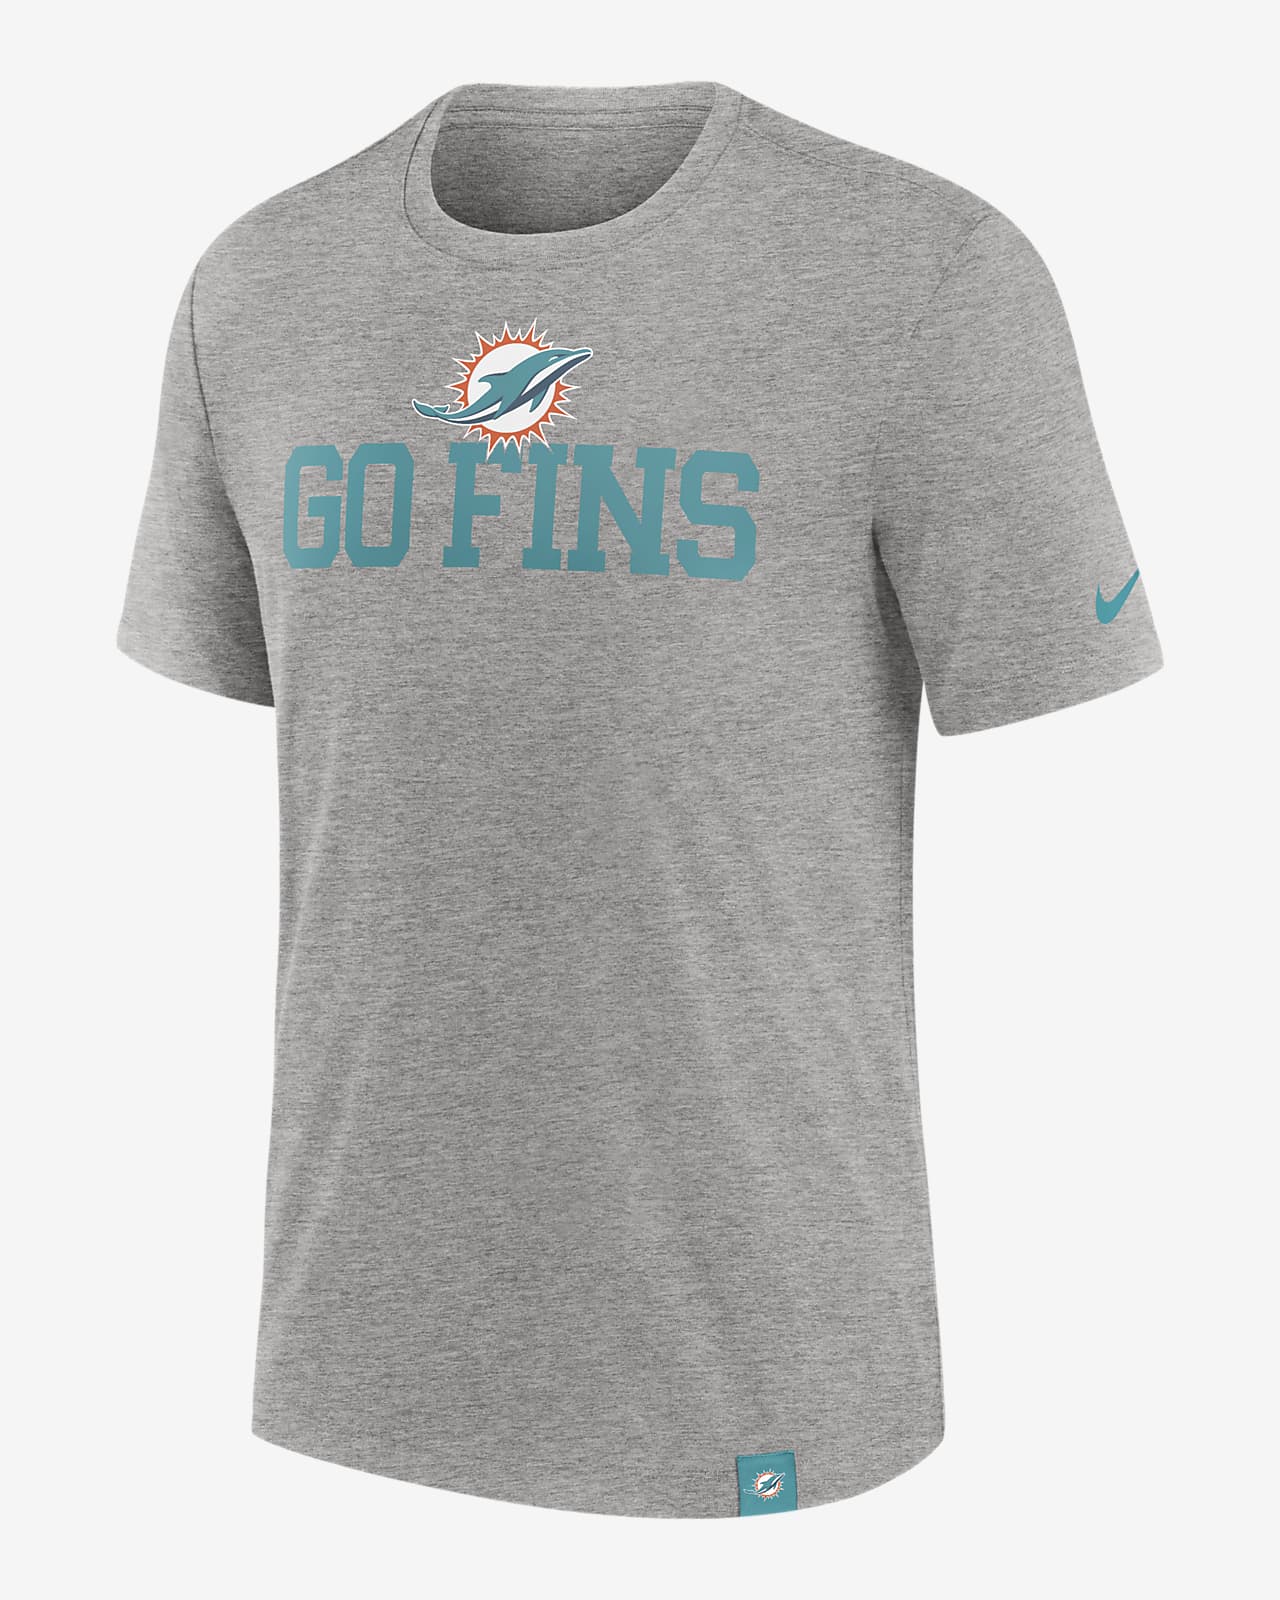 Miami Dolphins Blitz Men's Nike NFL T-Shirt